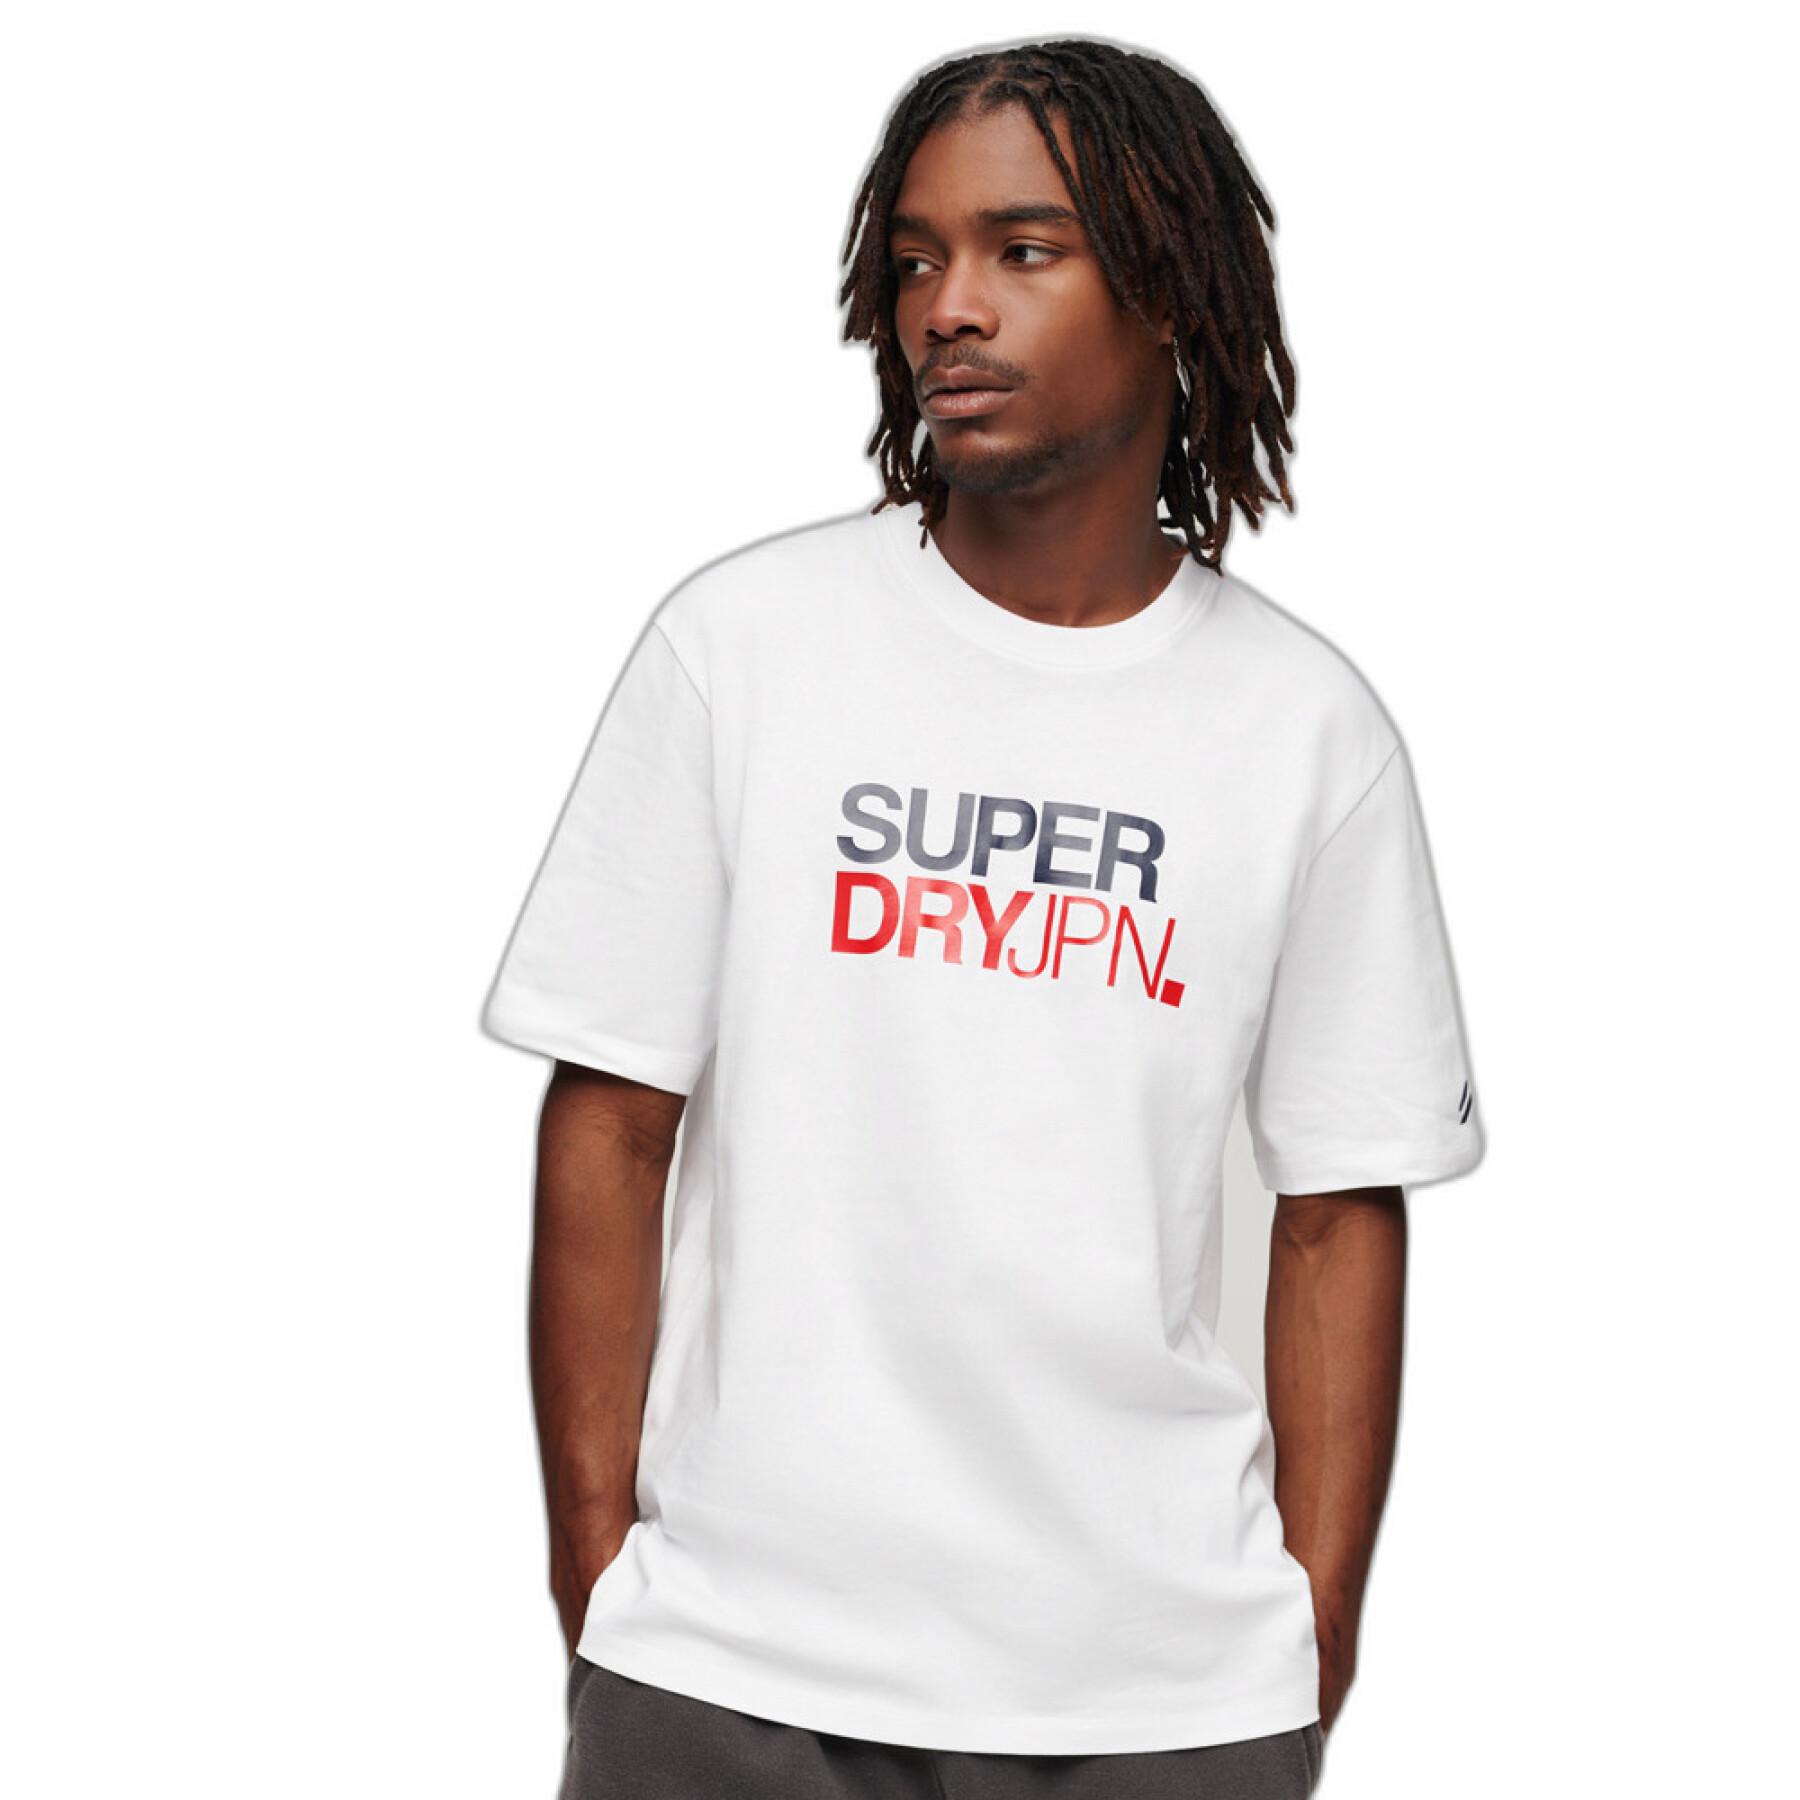 T-shirt ample à logo Superdry Sportswear